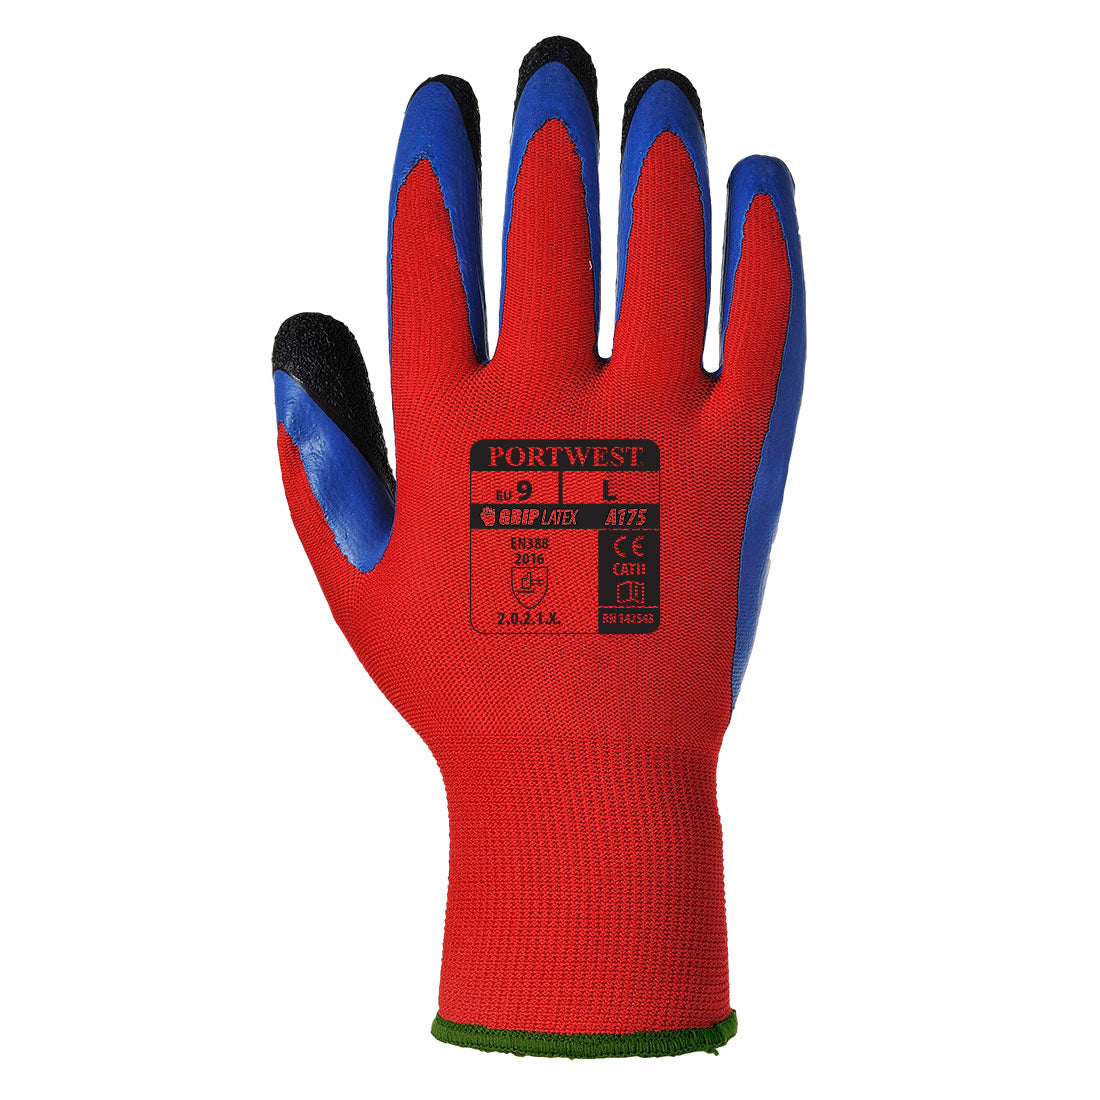 Portwest A175 Duo-Flex Glove for General Handling